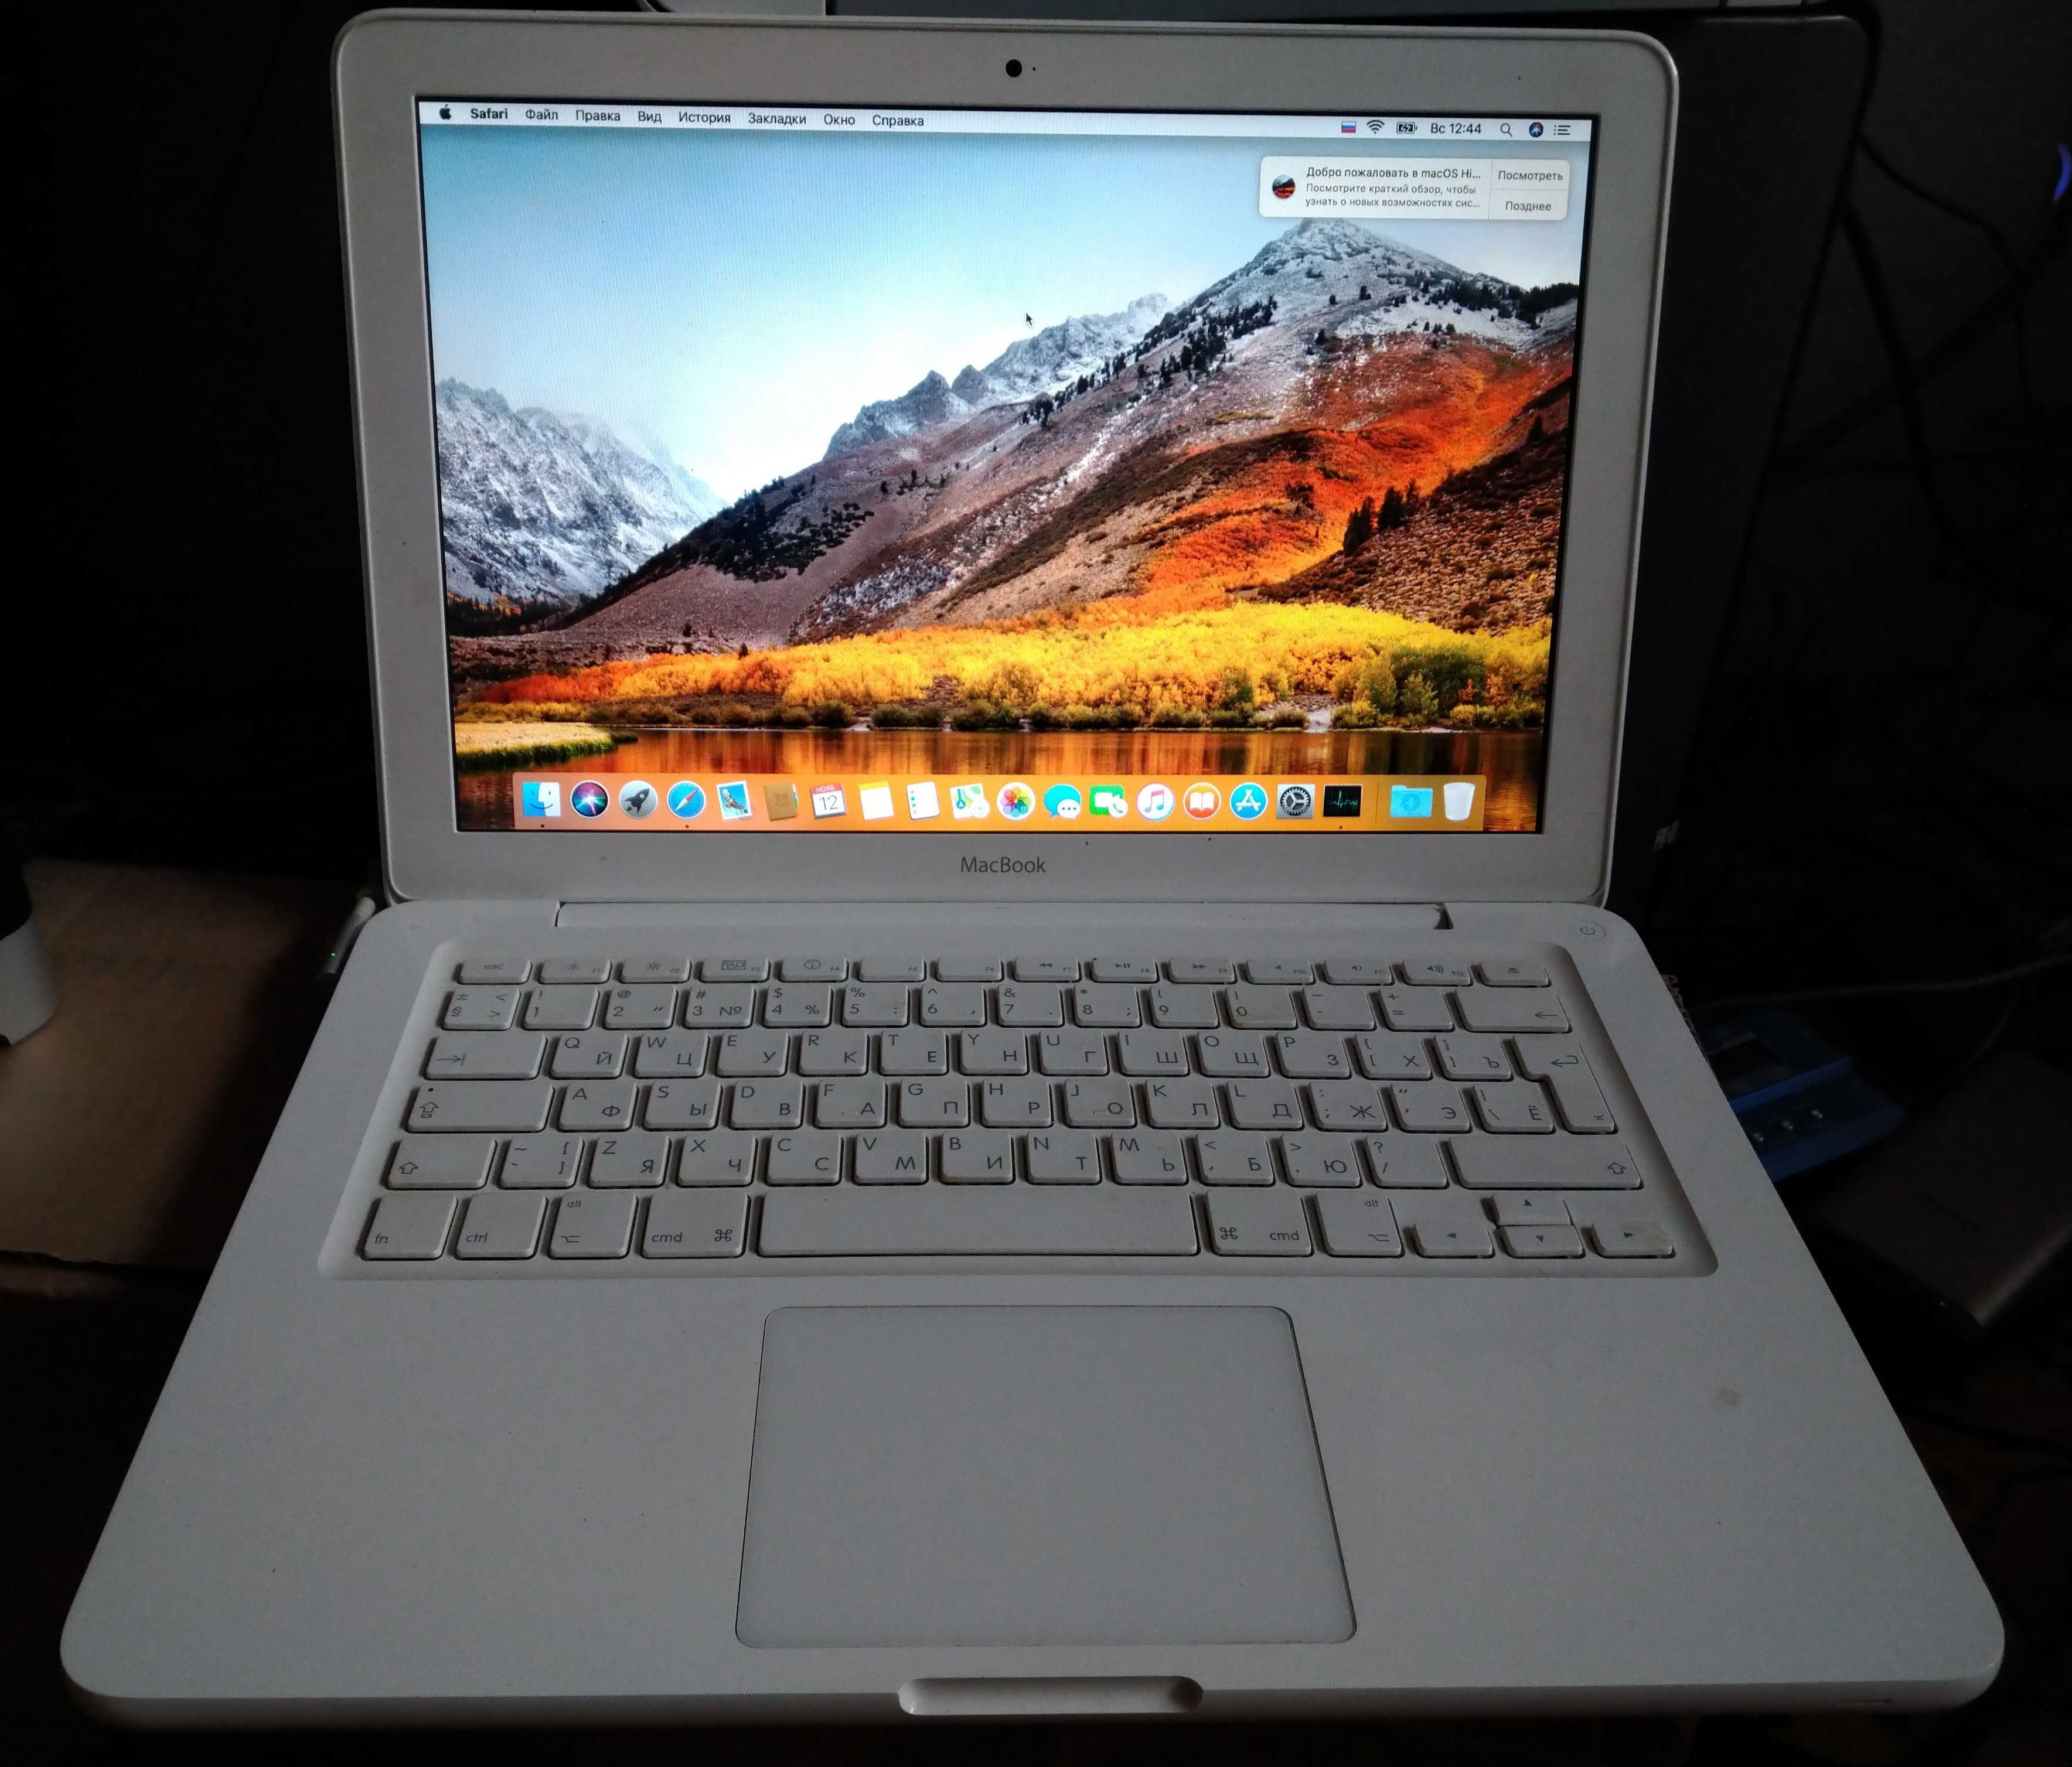 MacBook 7,1 (13-Inch, Mid 2010)